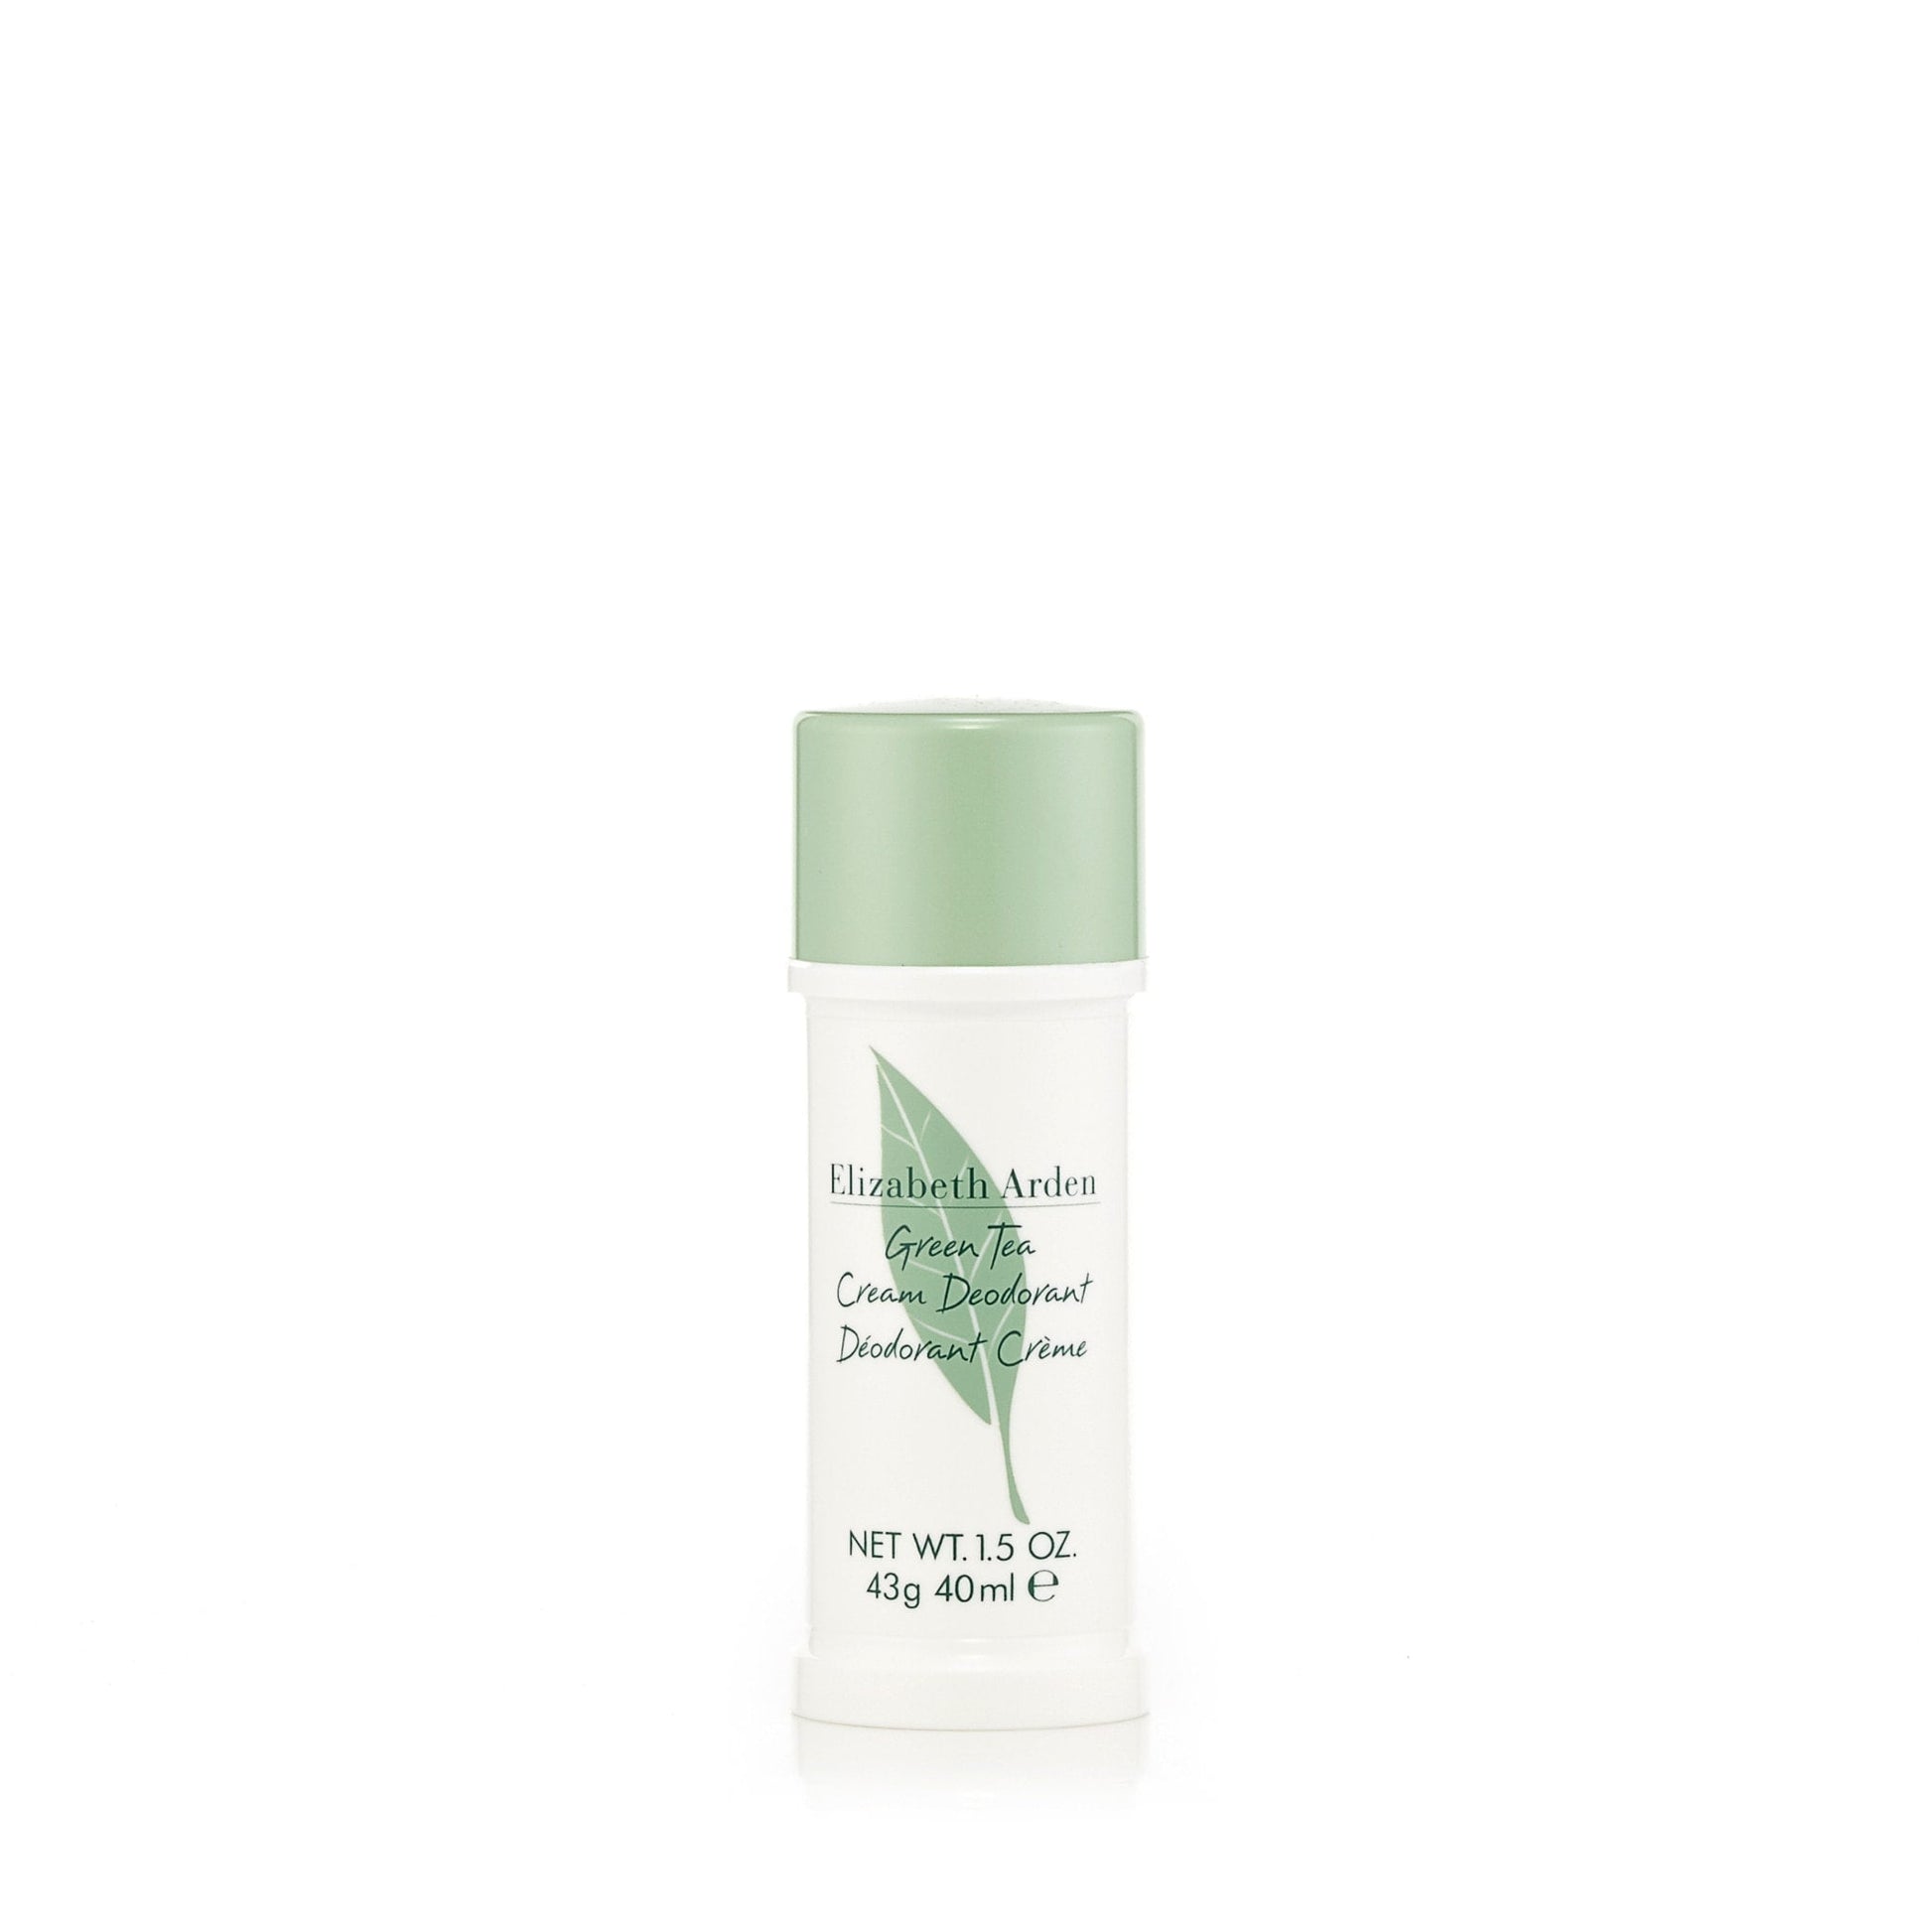 Green Tea Deodorant for Women by Elizabeth Arden, Product image 1